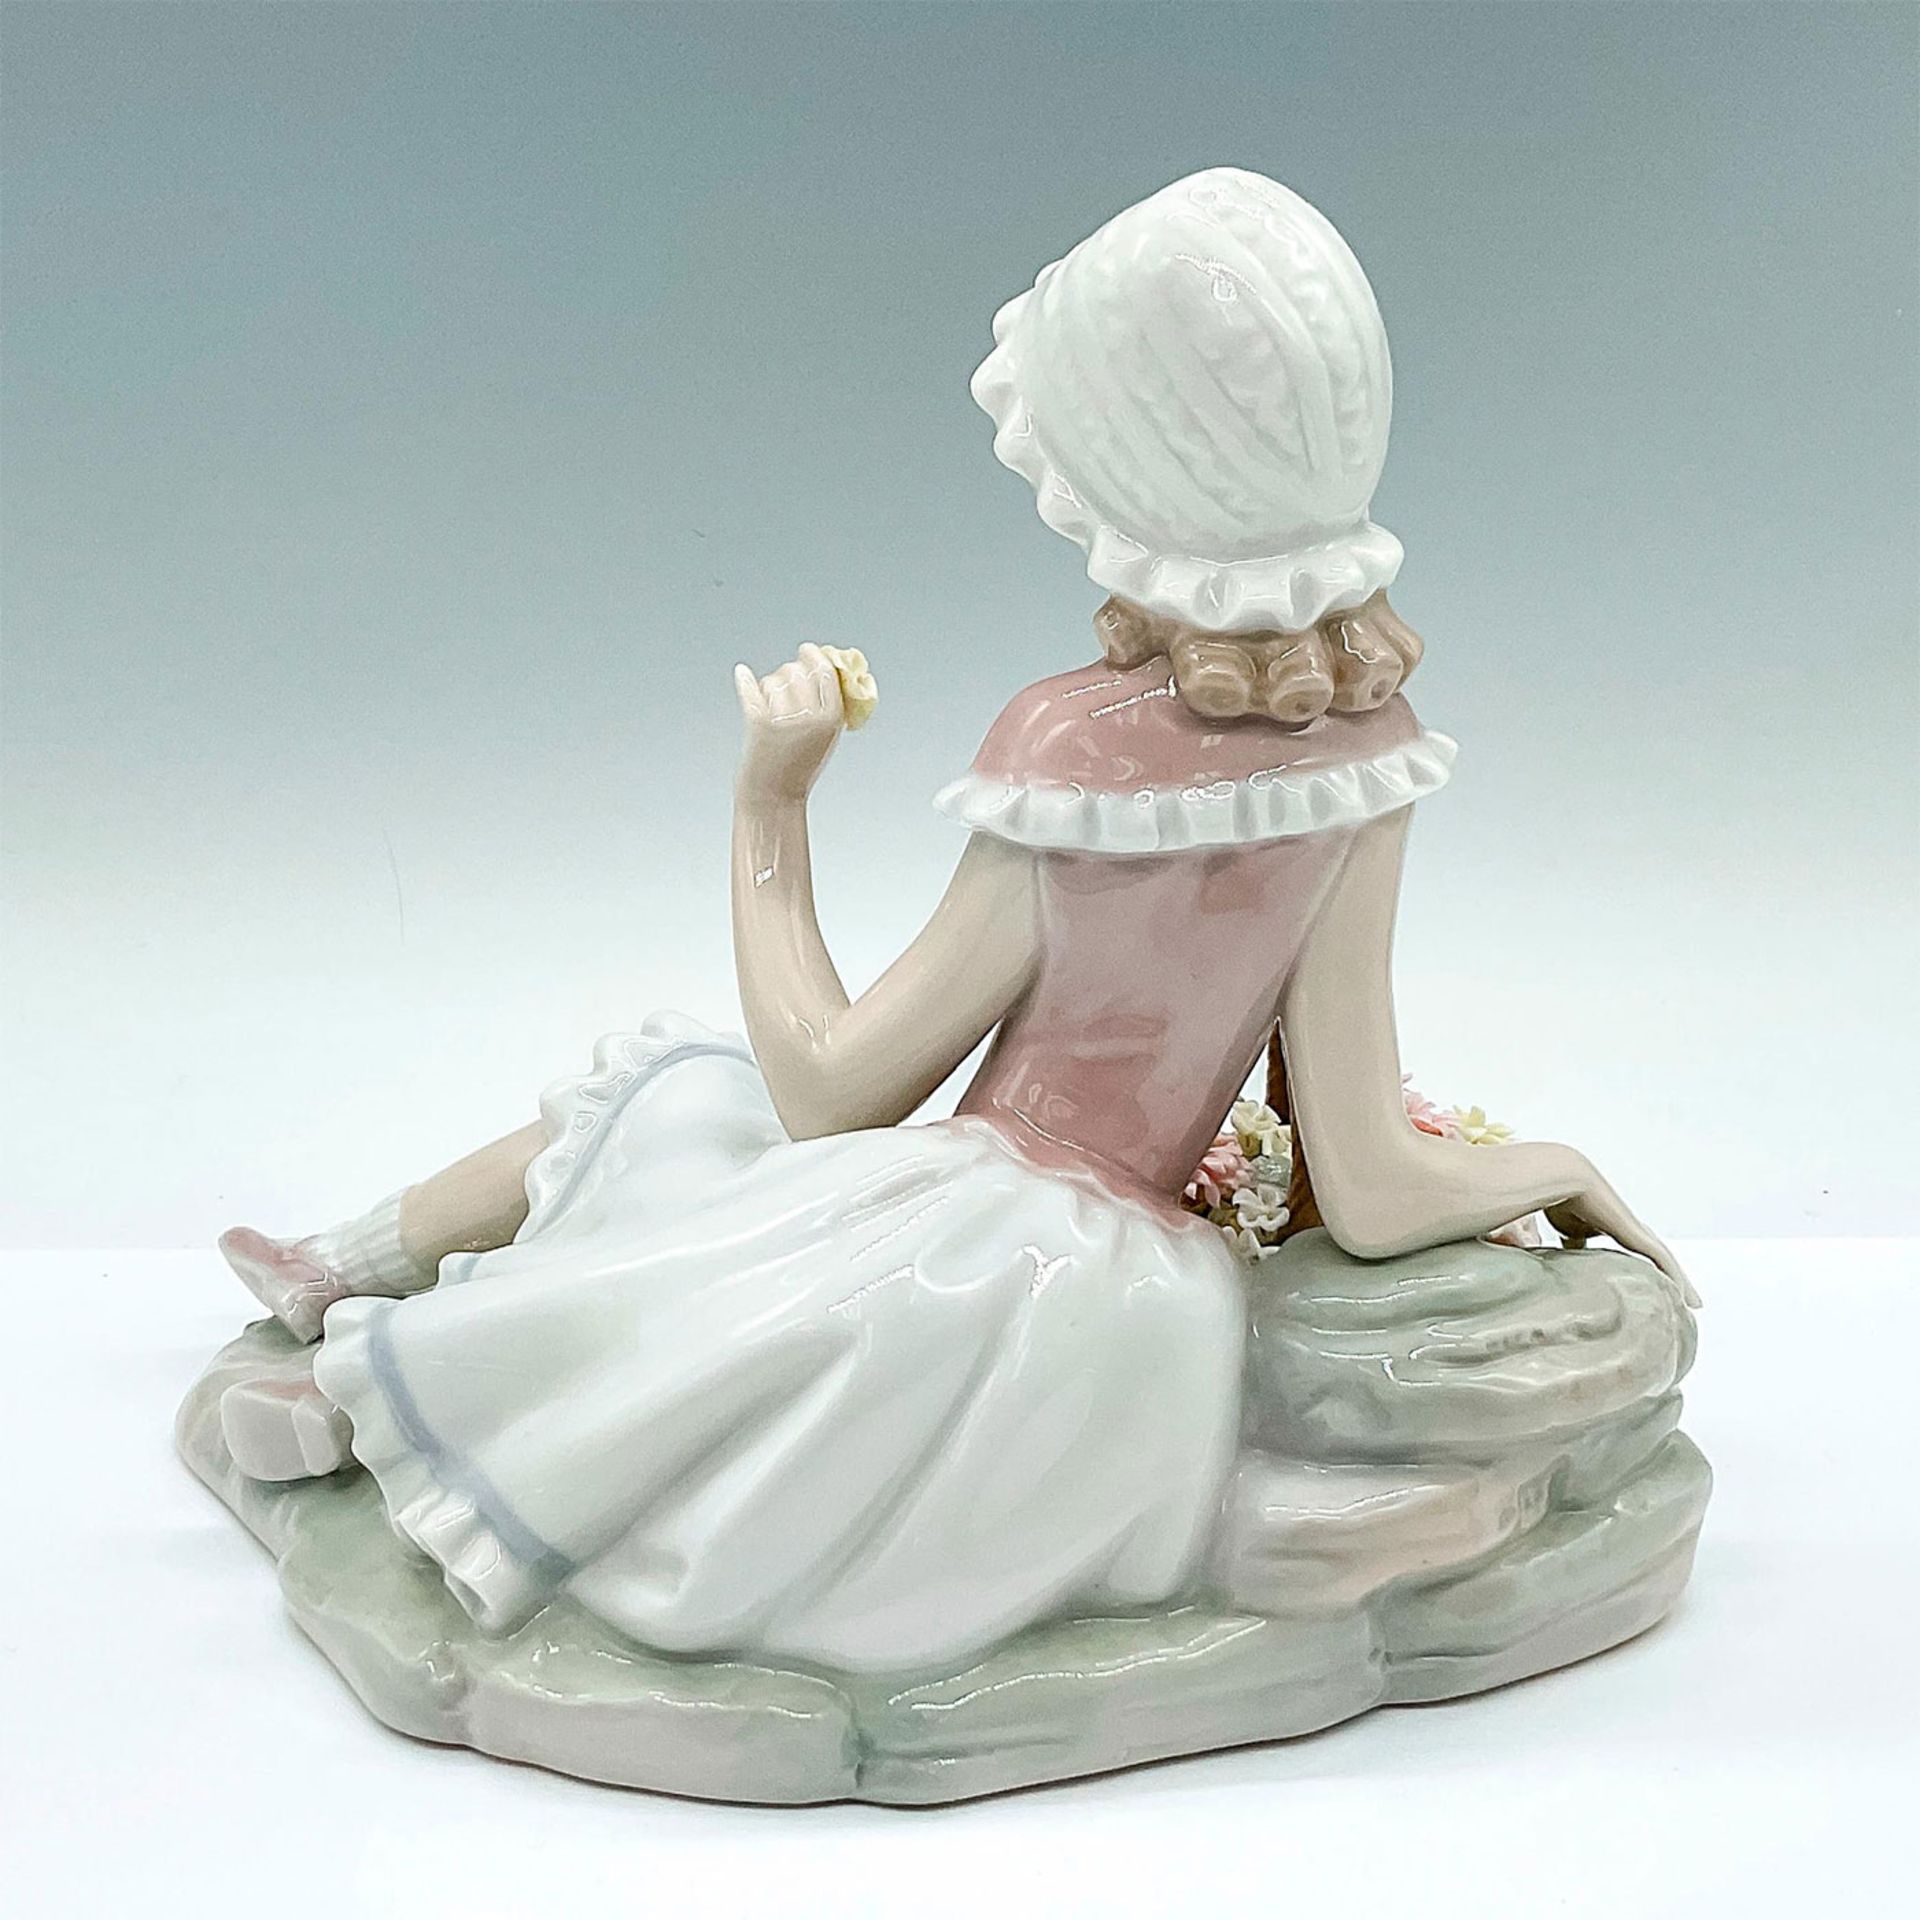 Admiration 1004907 - Lladro Porcelain Figurine - Image 2 of 3